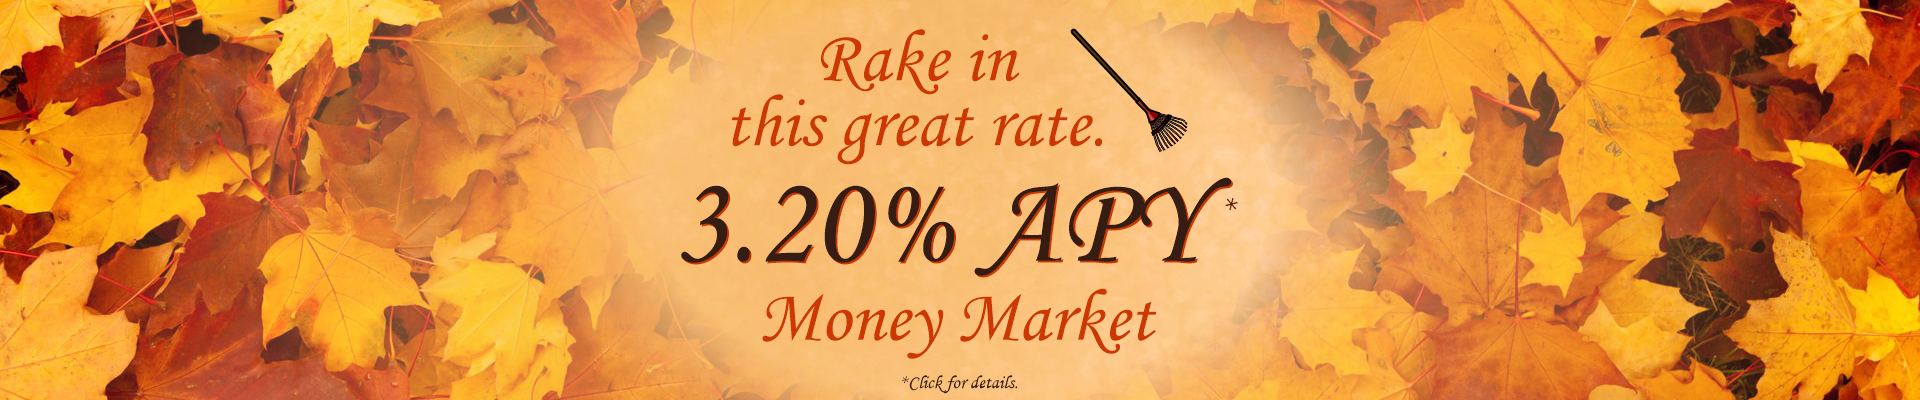 3.20% APY Money Market Special